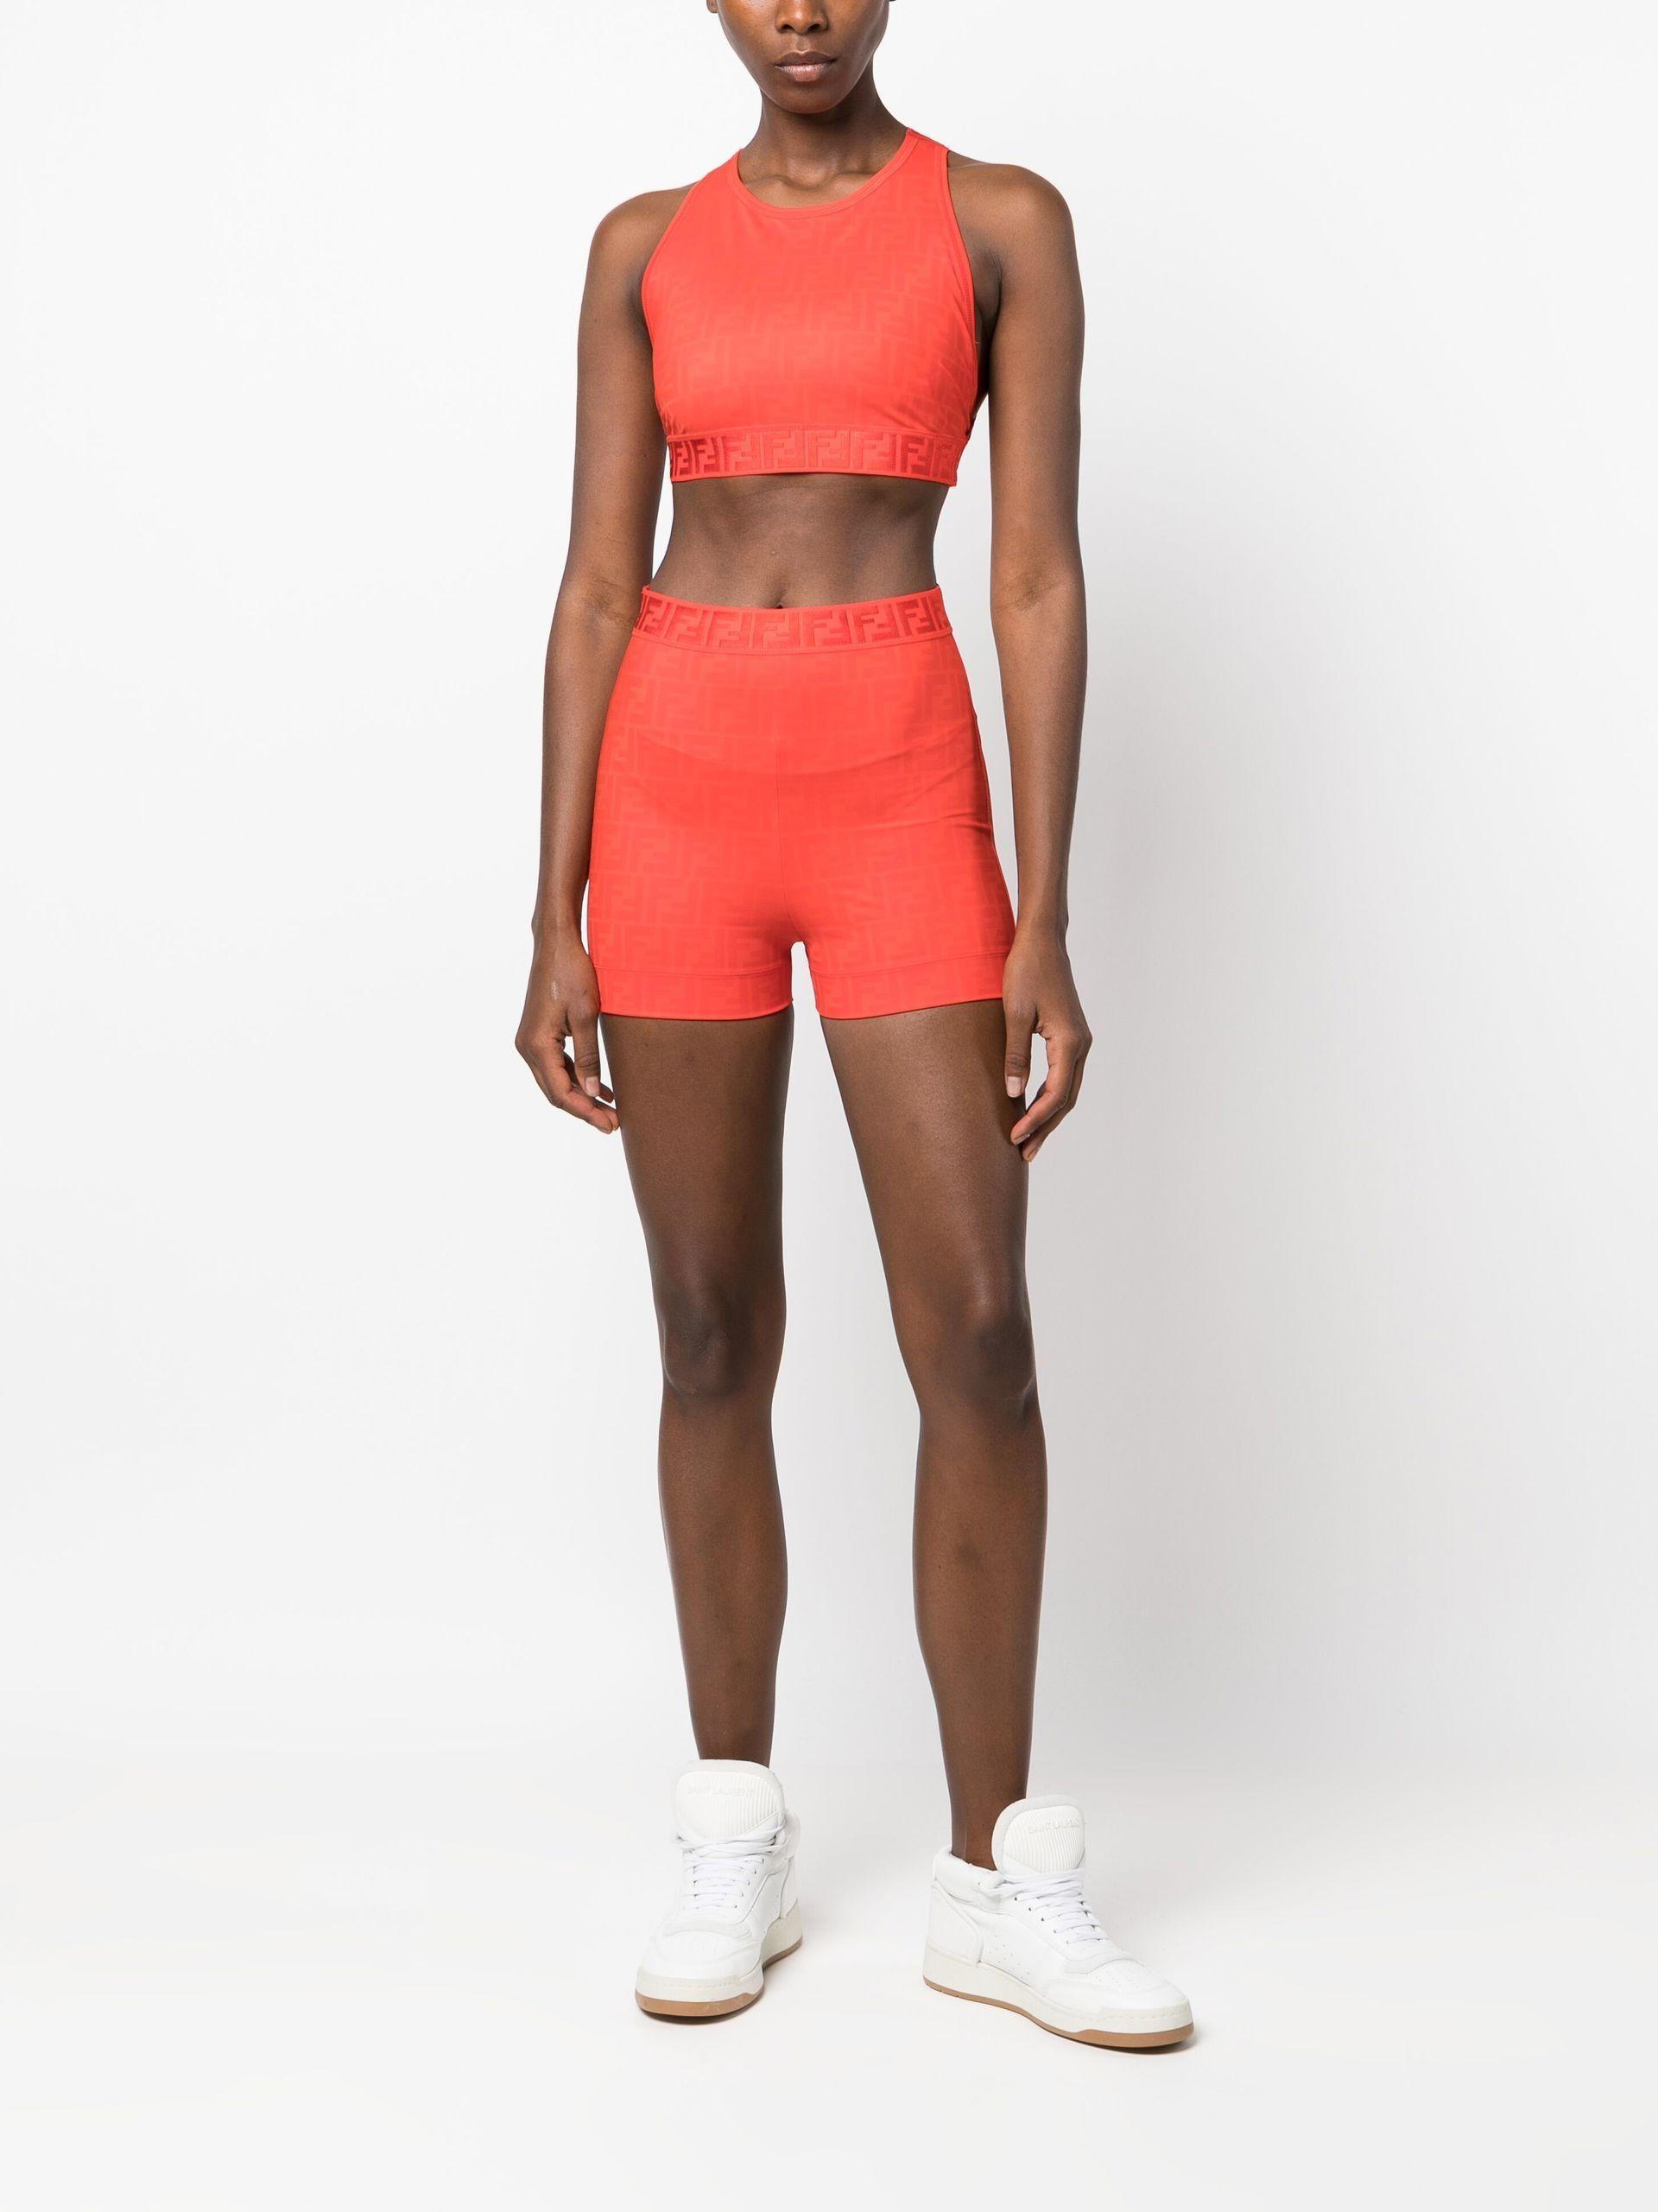 Fendi x Skims Mini Shorts - Red, 12.25 Rise Shorts, Clothing - FENSK21033